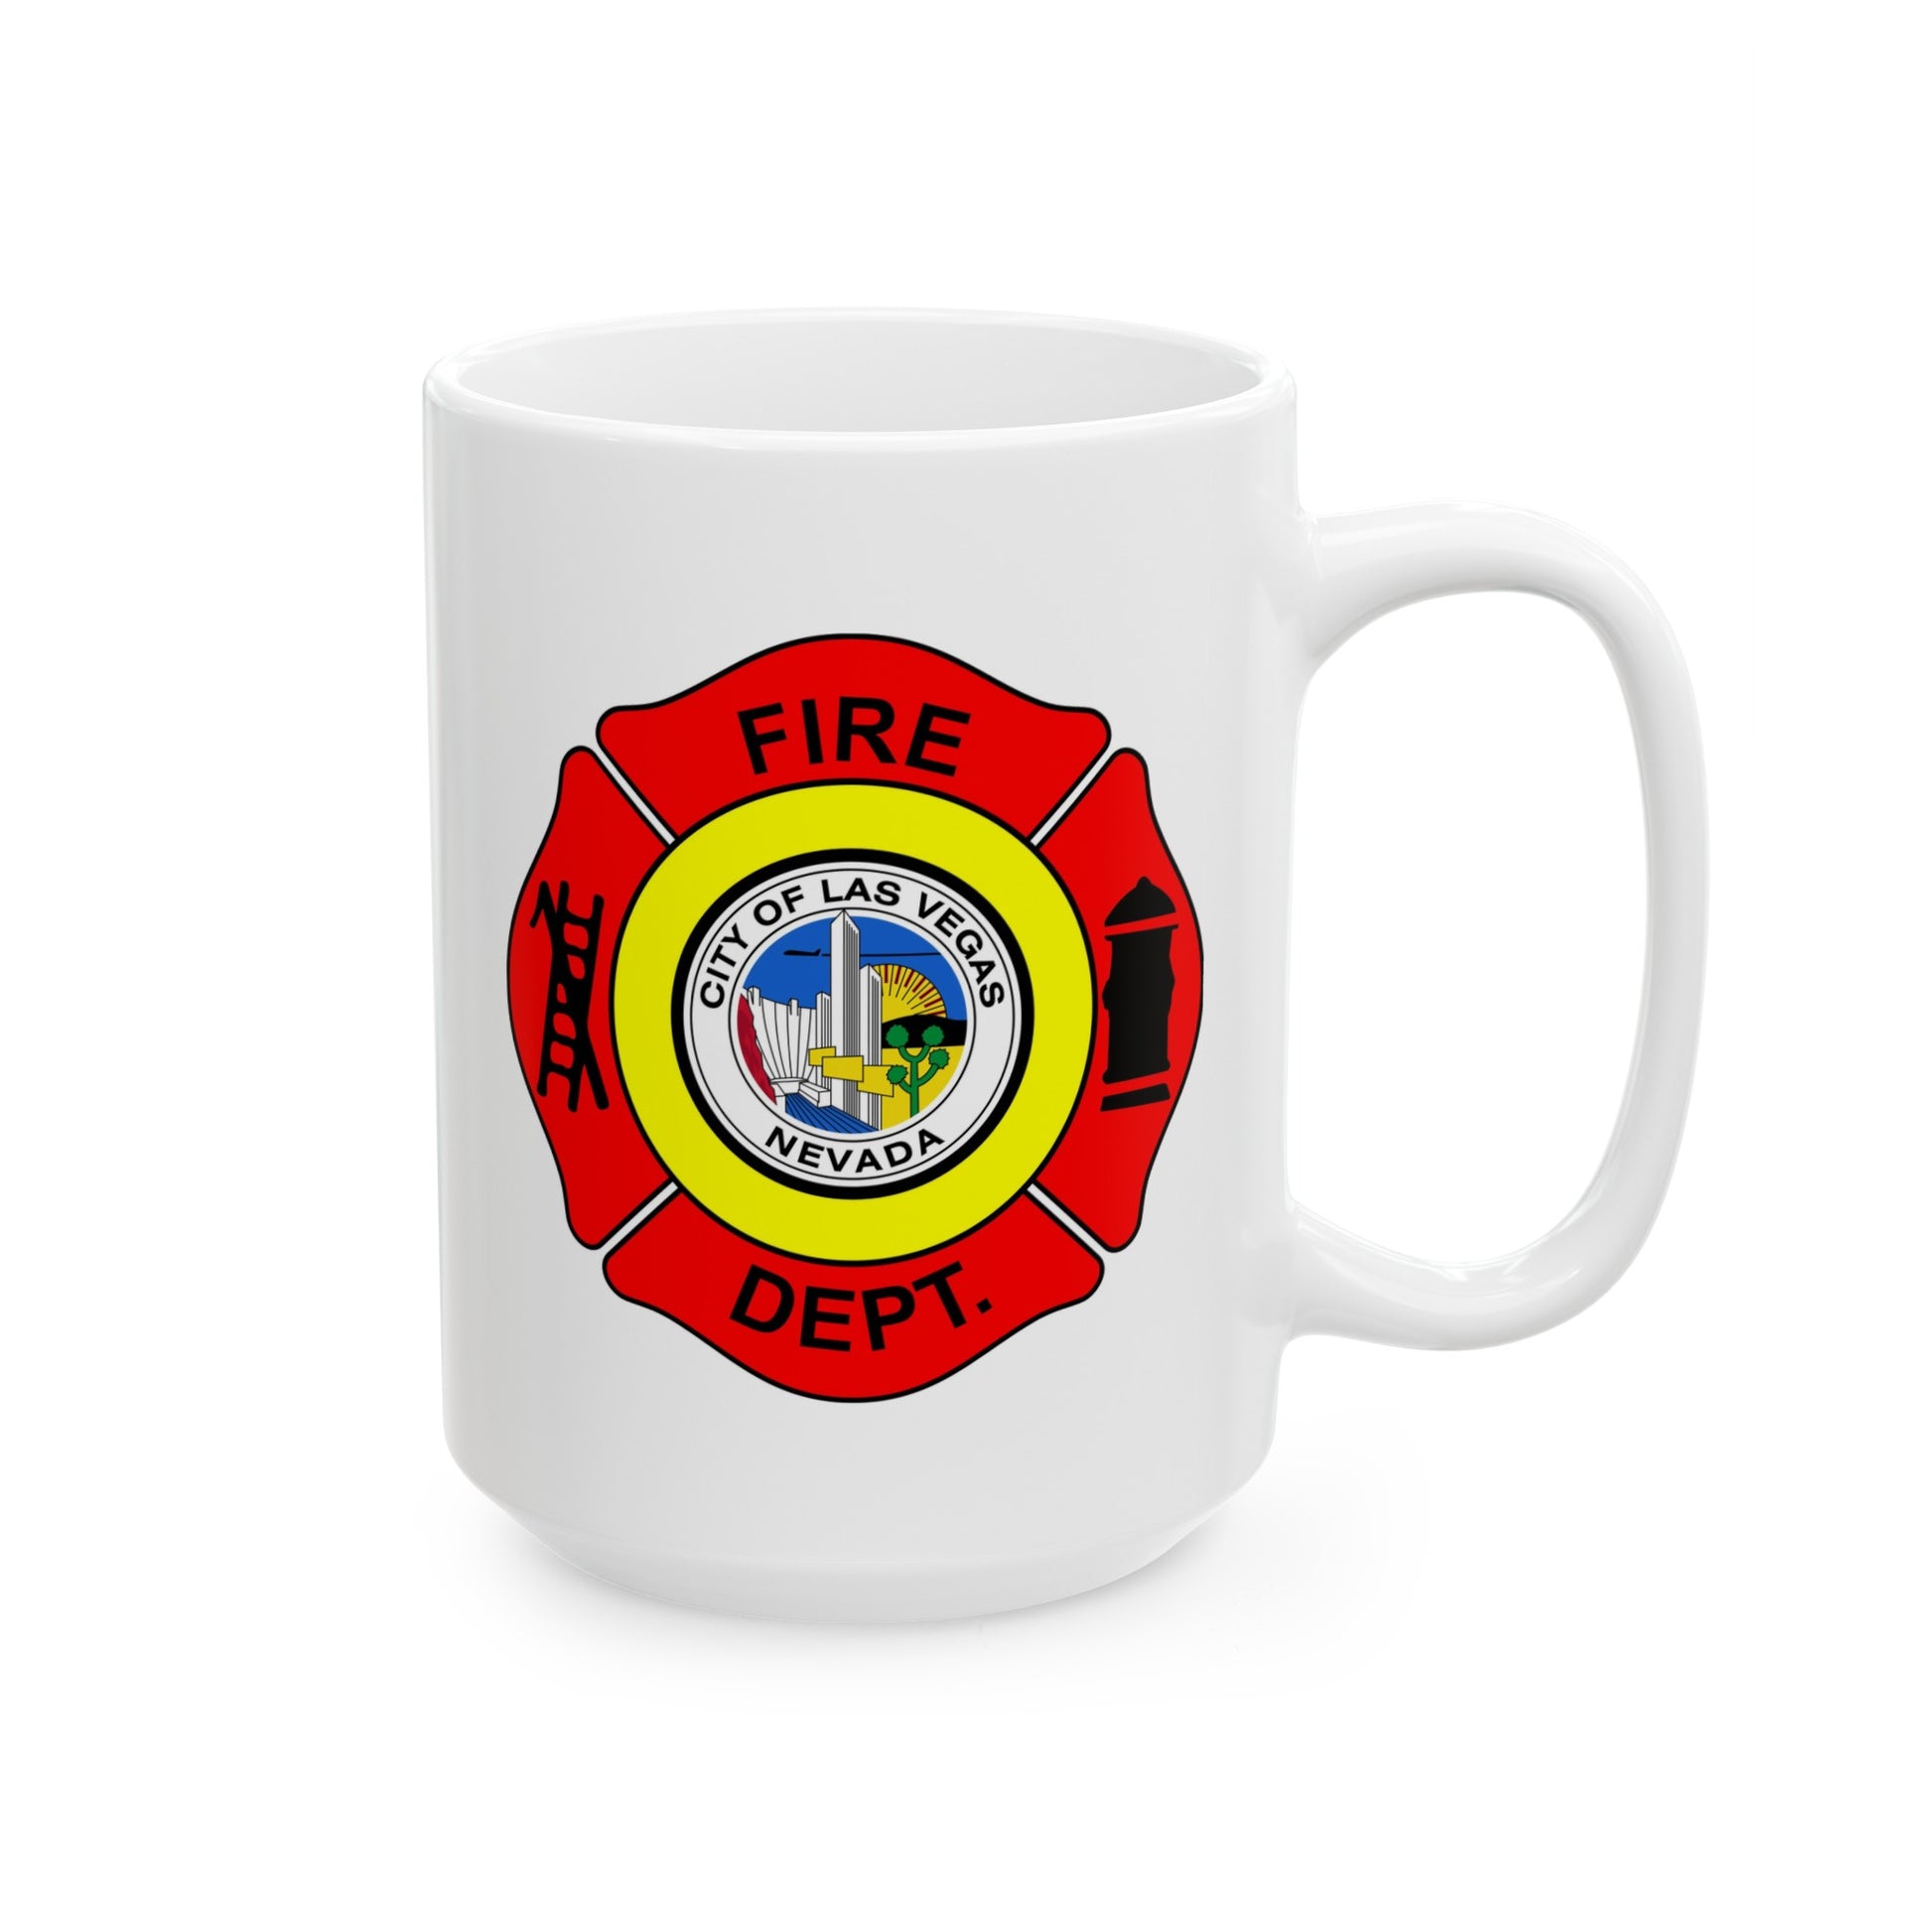 Las Vegas Fire Department Coffee Mug - Double Sided Print White Ceramic 15oz by TheGlassyLass.com